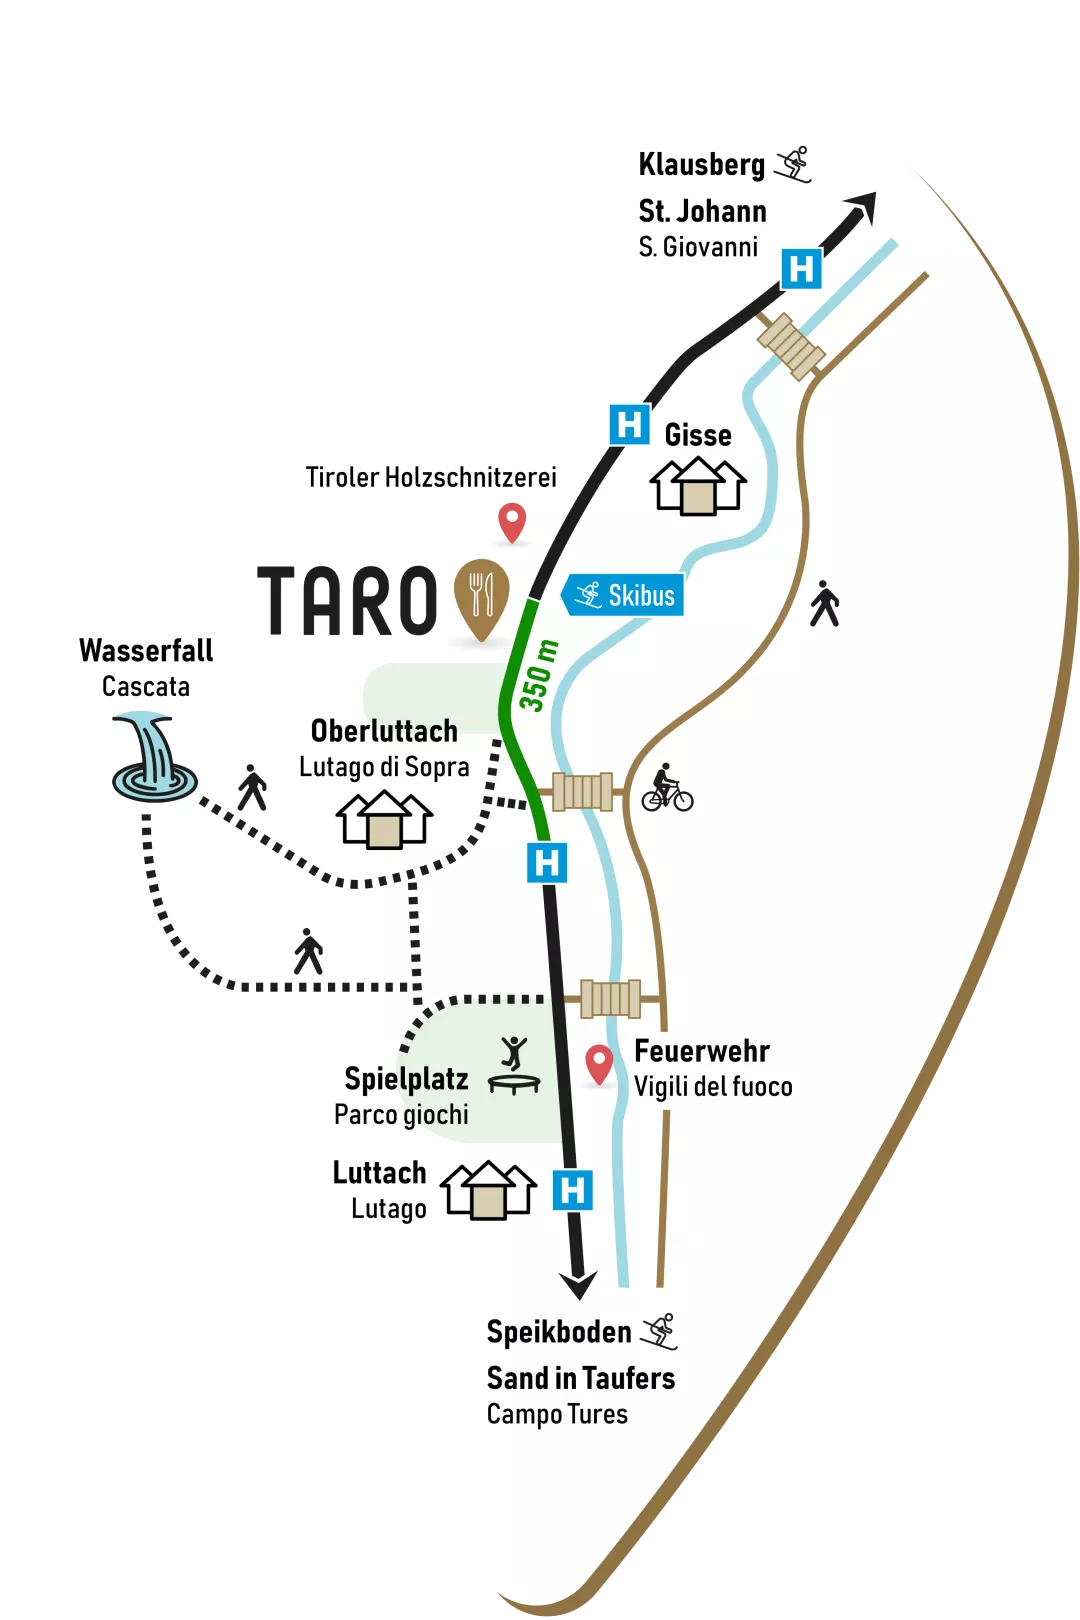 Location Taro